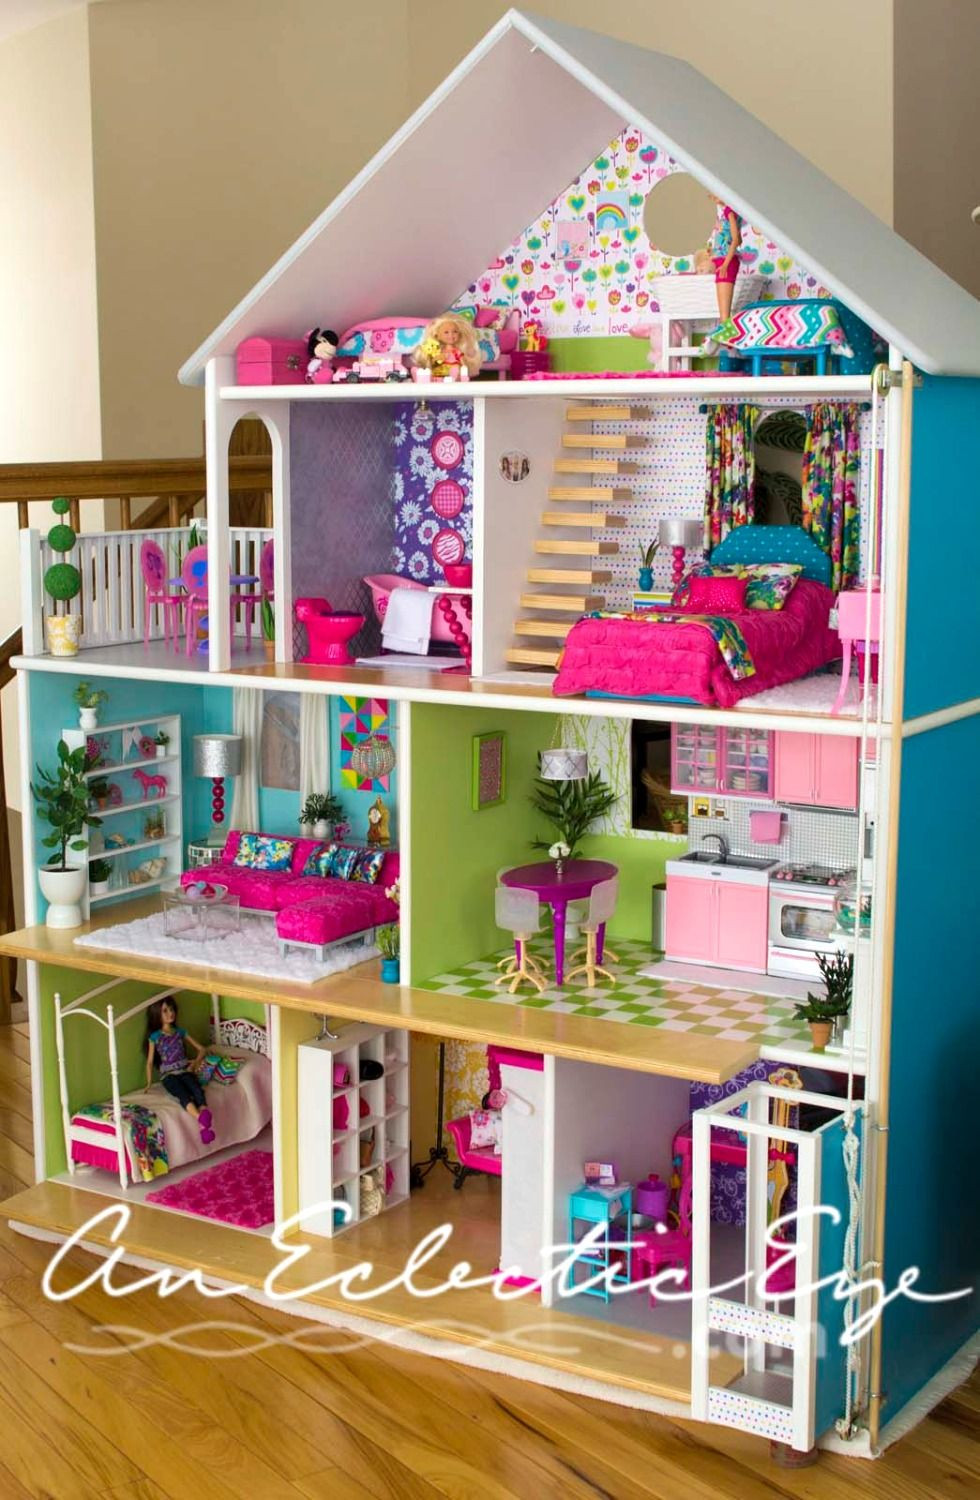 Best ideas about DIY Doll Houses
. Save or Pin DIY dollhouse my DIYs Now.